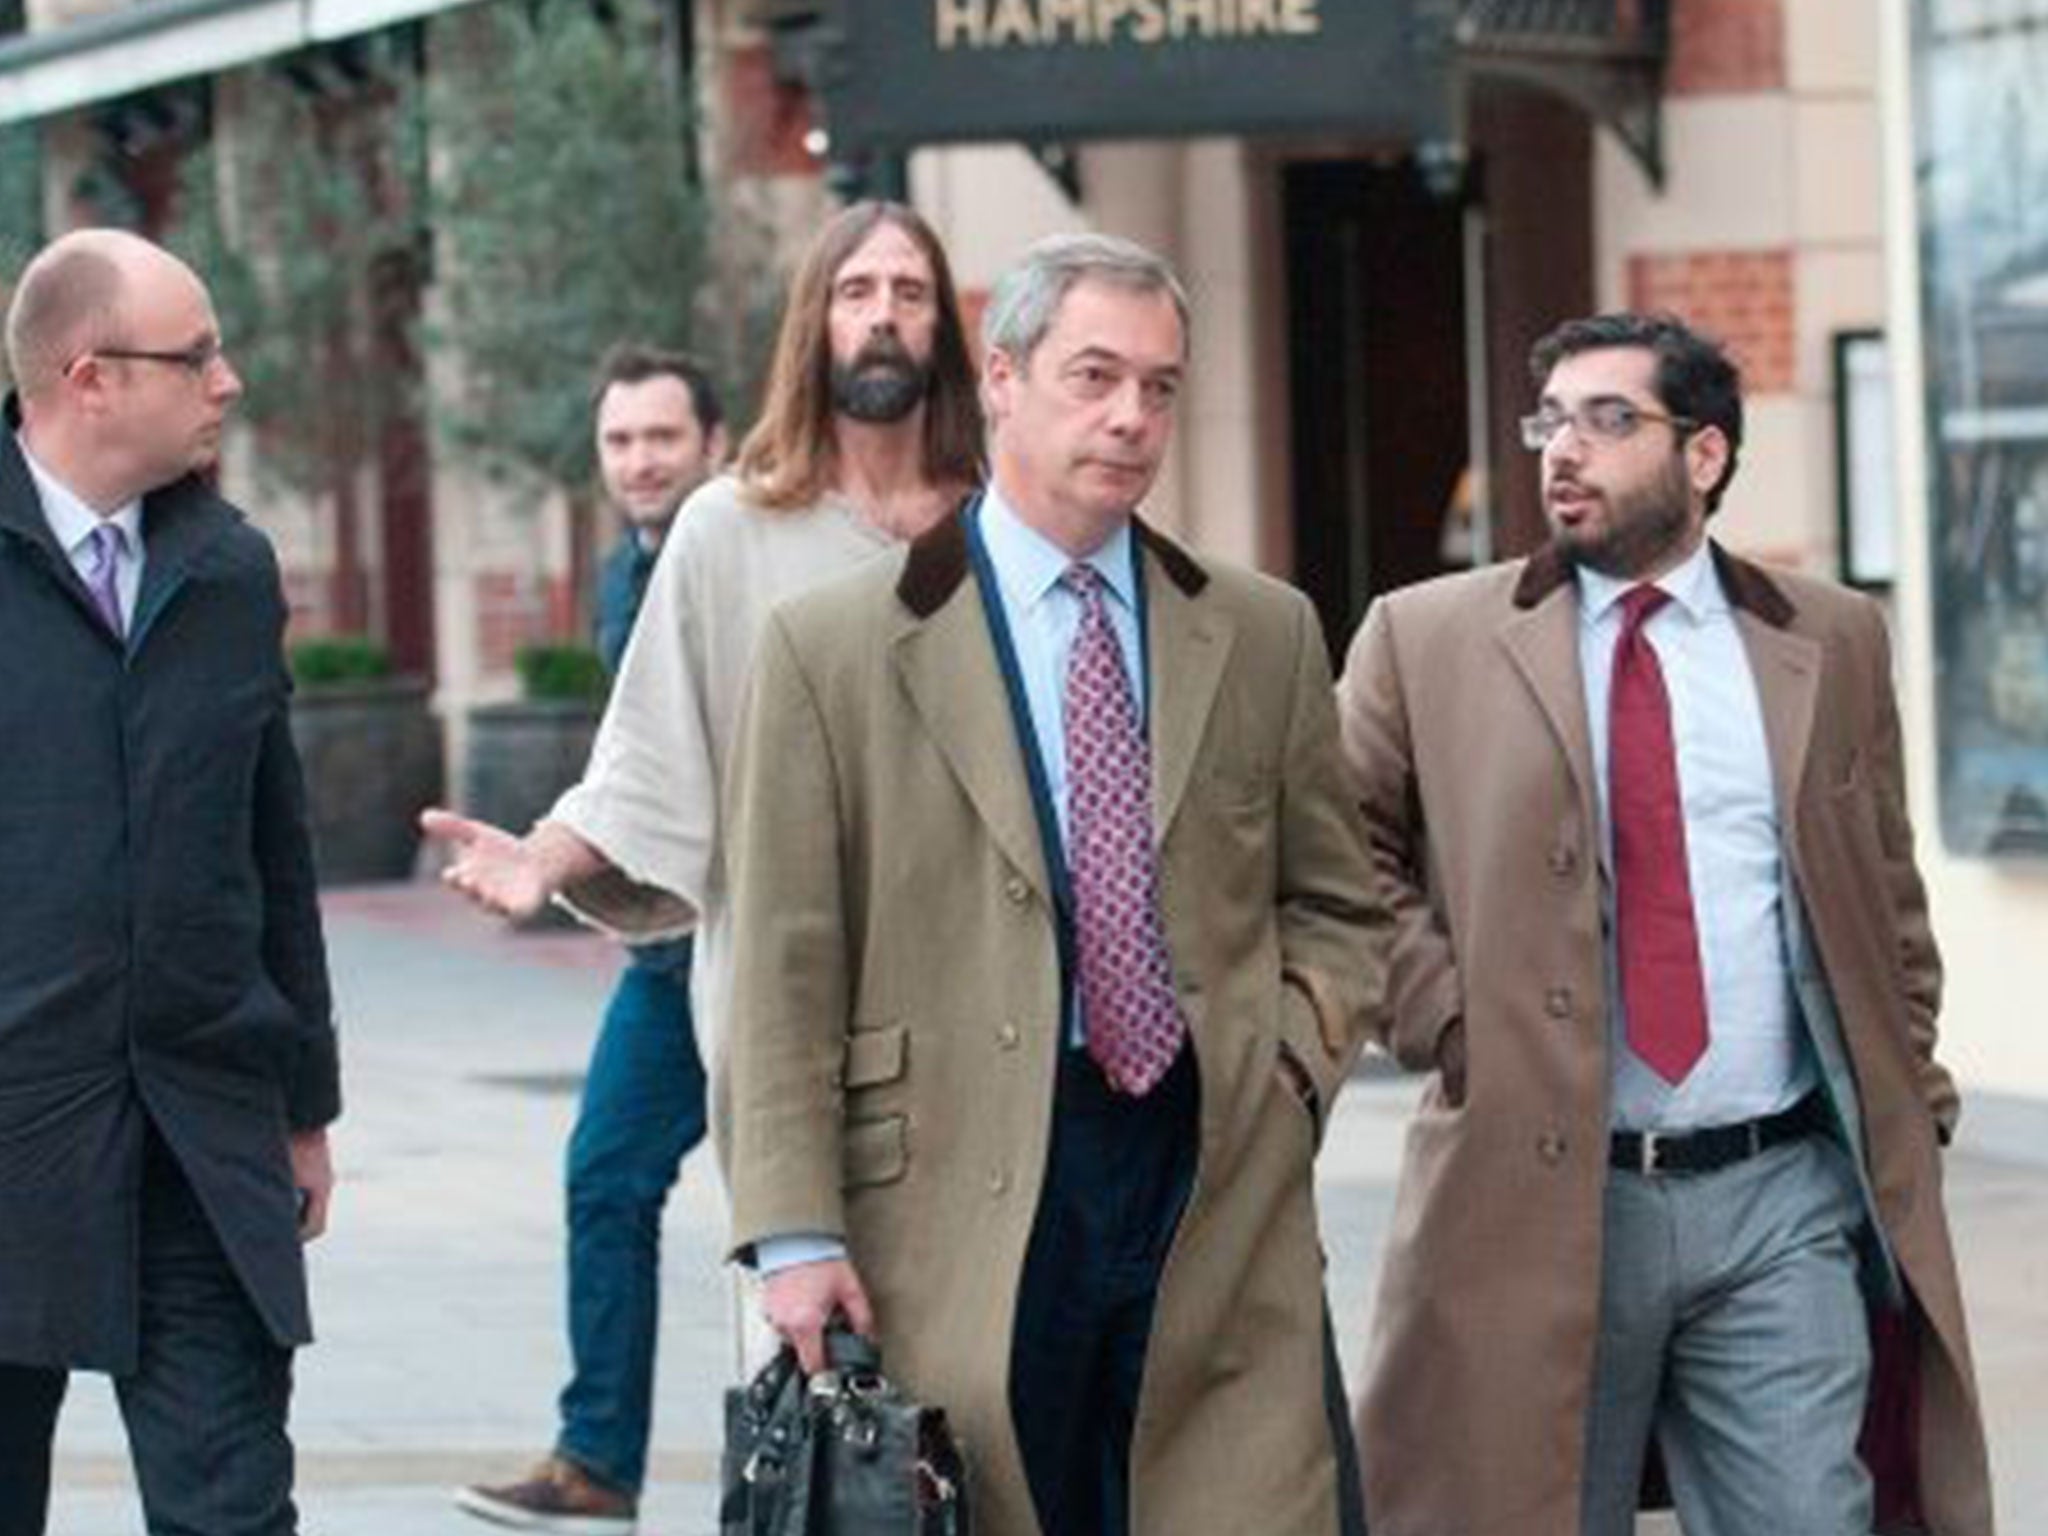 Kevin Lee Light, aka Jesus of Hollywood, pursues Nigel Farage as he leaves the LBC studios